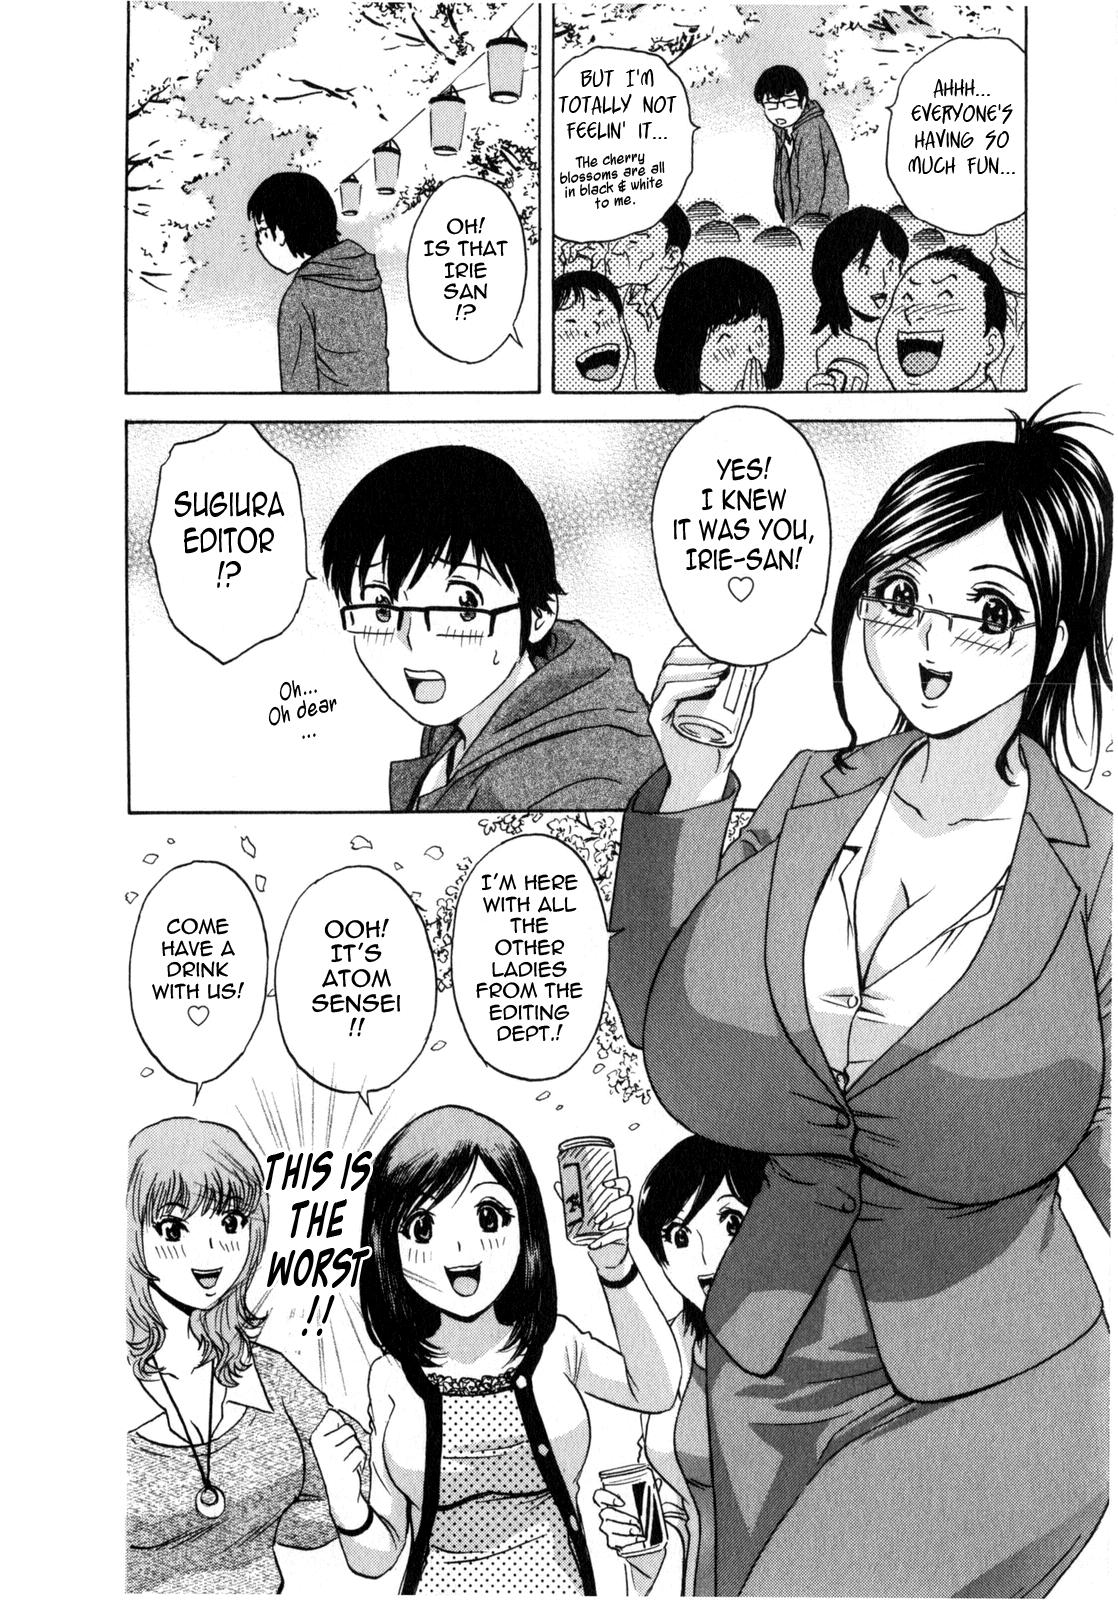 [Hidemaru] Life with Married Women Just Like a Manga 2 - Ch. 1-8 [English] {Tadanohito} 72